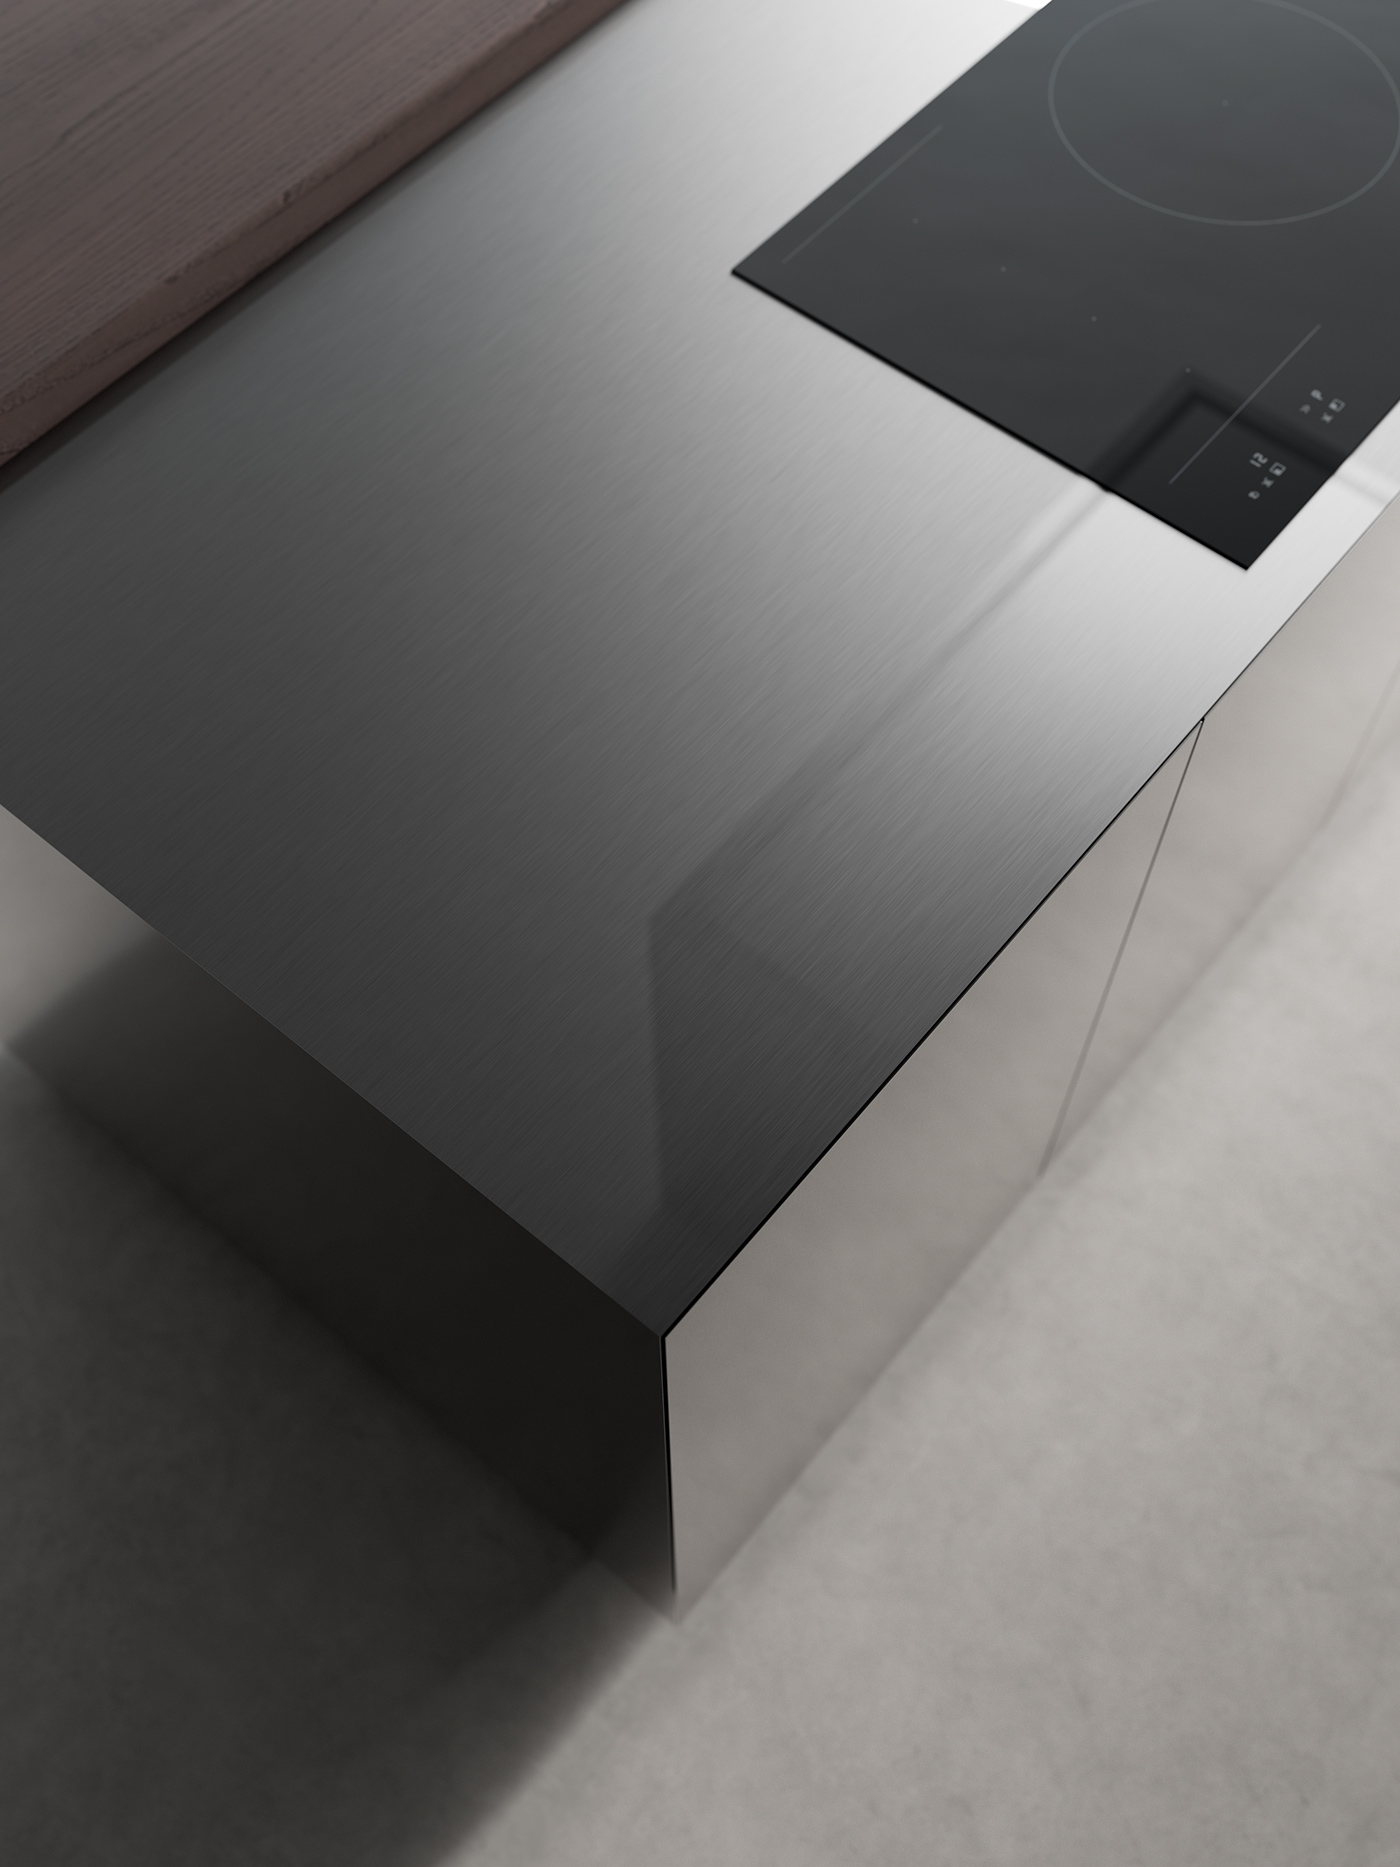 3D design inspiration Interior kitchen luxury maverickrender new Render studio podrini